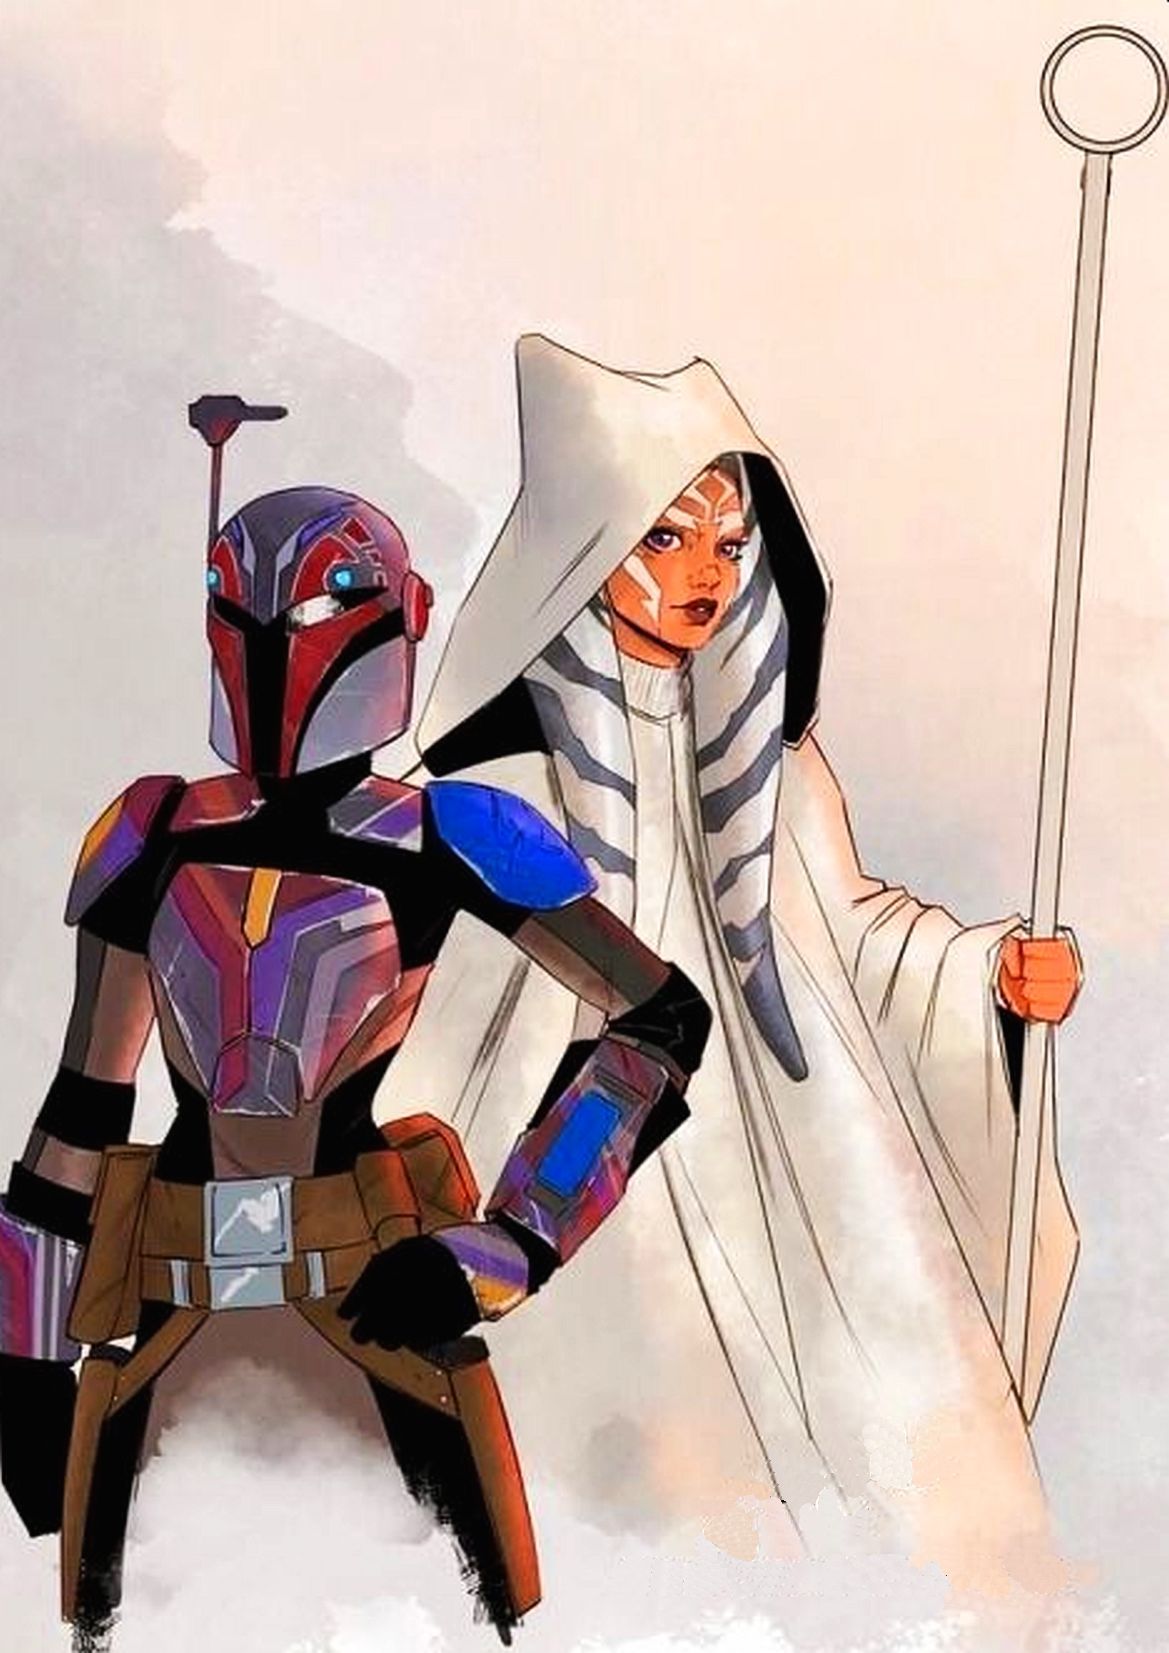 Grey Jedi Ahsoka Tano & Mandolorian Sabine Wren. Star wars picture, Star wars drawings, Star wars image